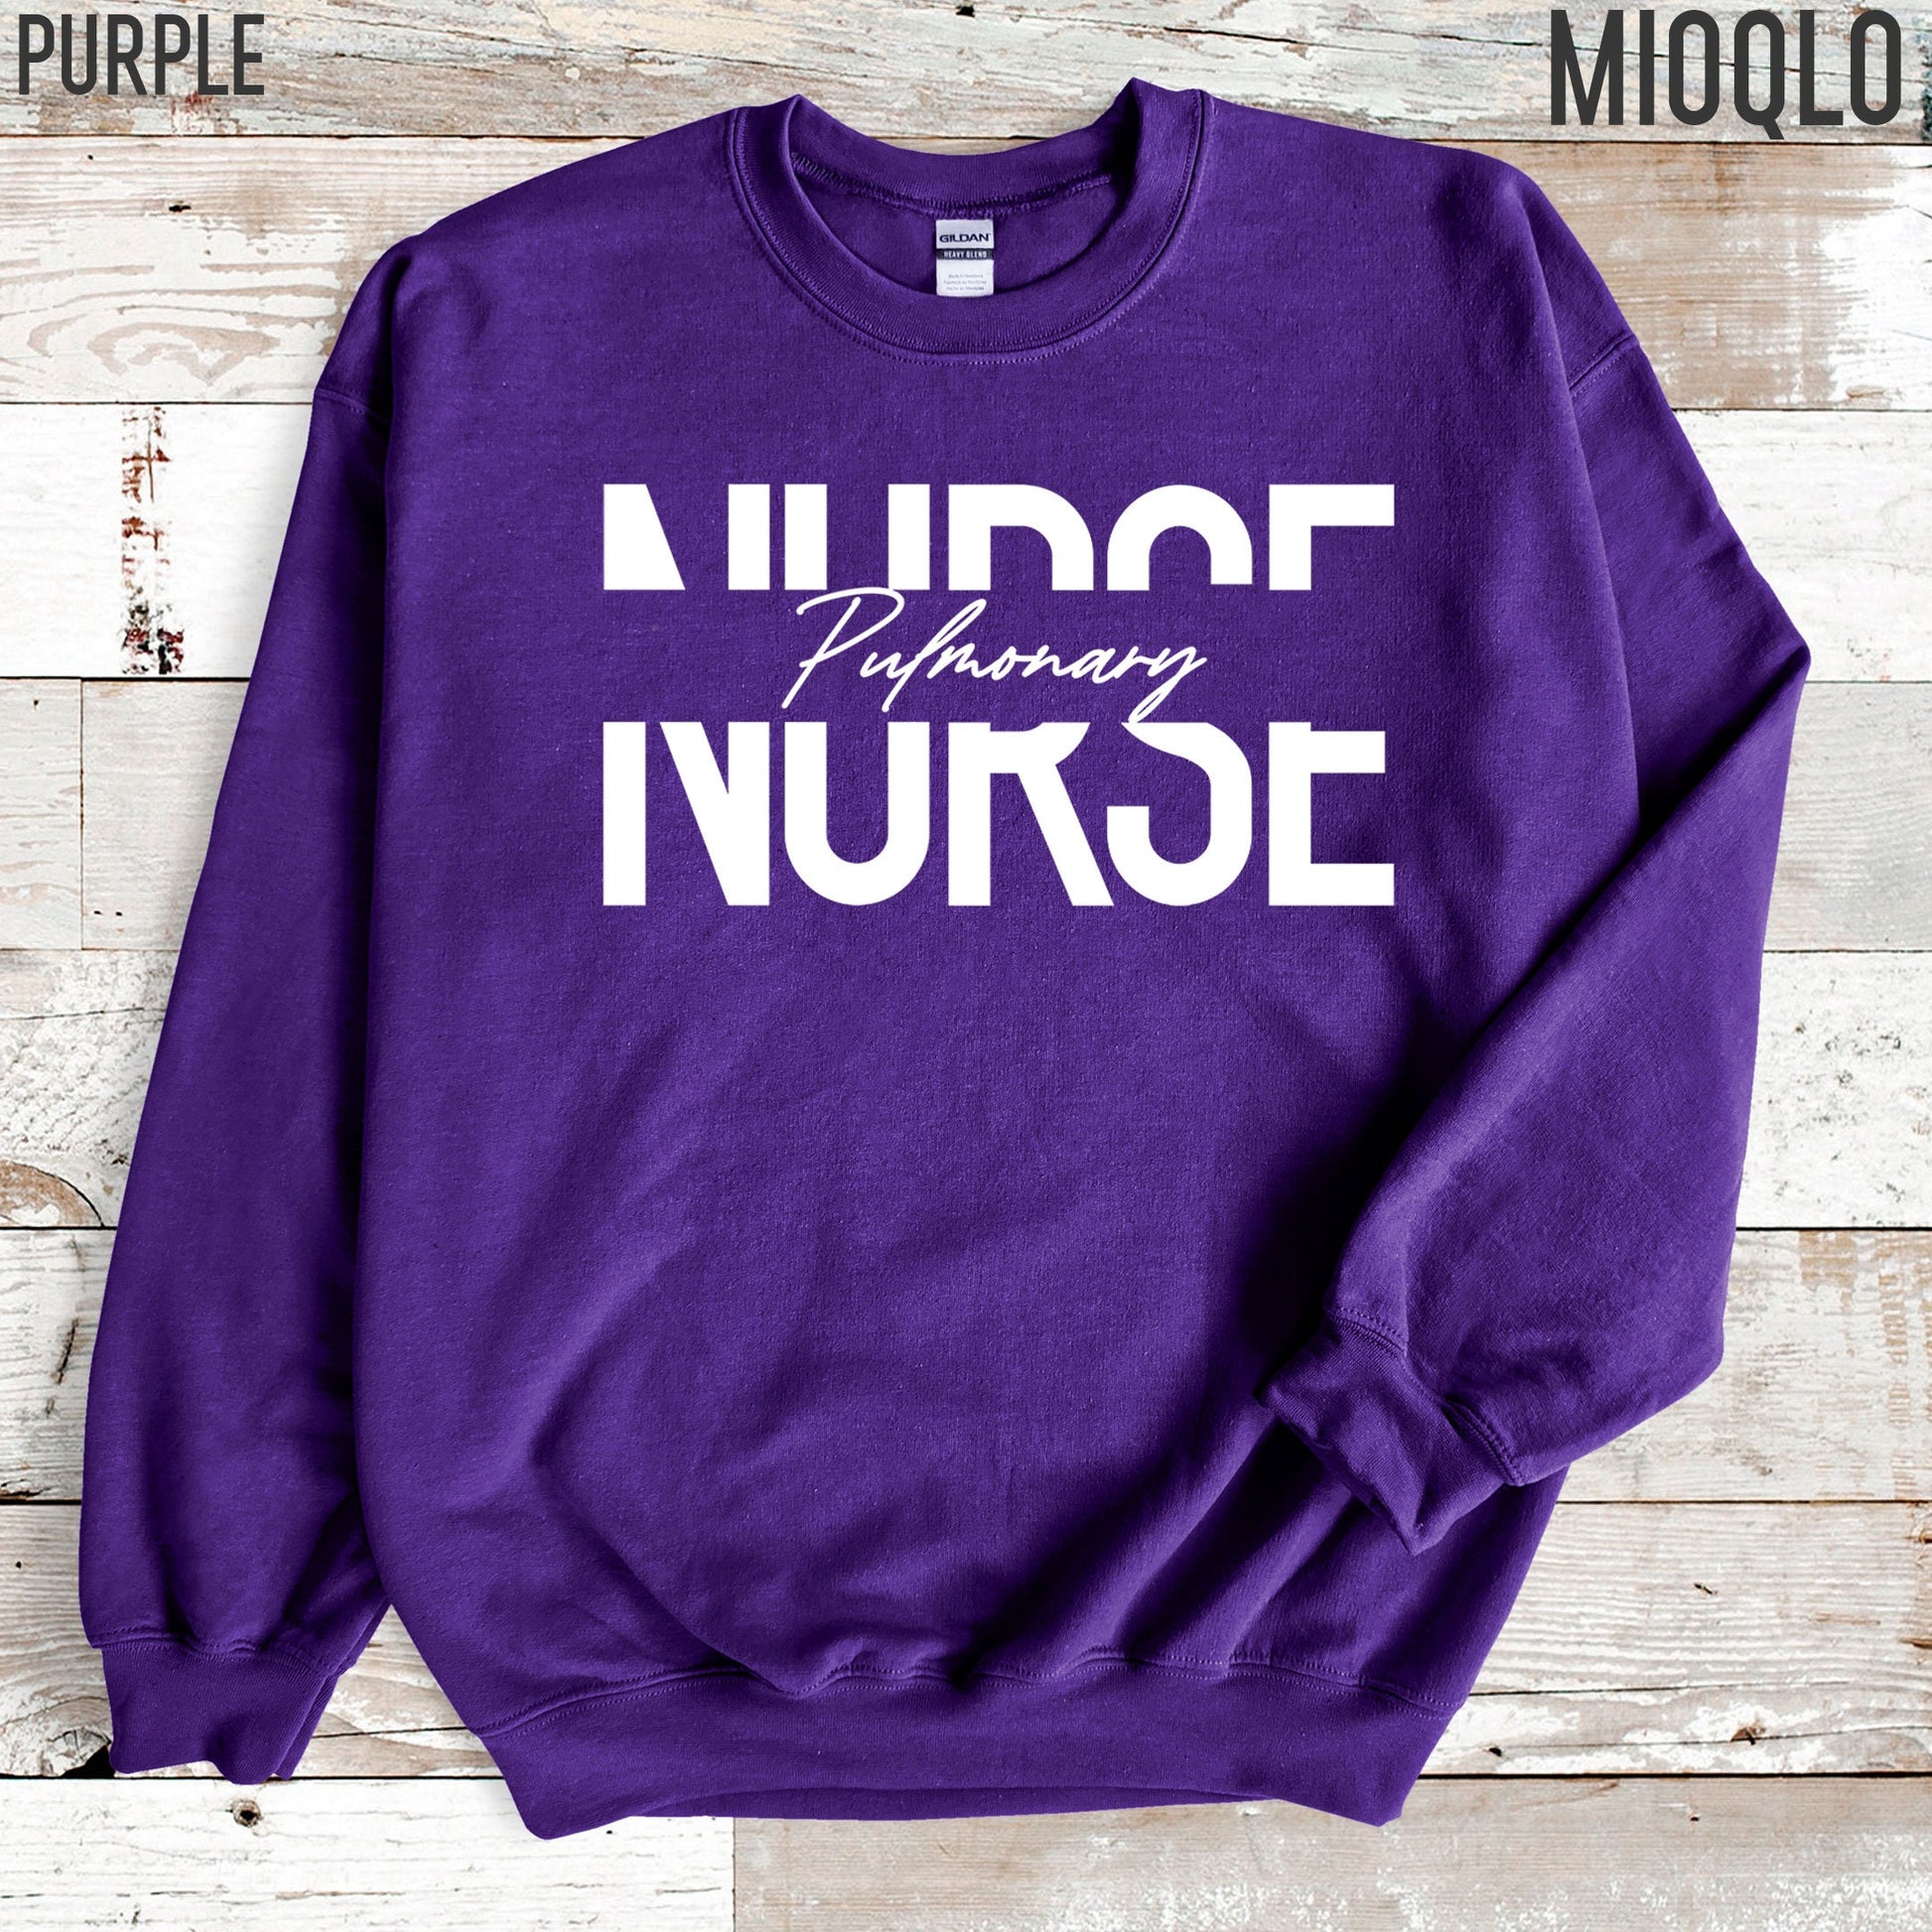 Nurse Pulmonary Sweatshirt, Future Lung Nurse Sweater, Lung Healthcare Disease Nurse Undergraduate, Breathing School Nurse Graduation Tee